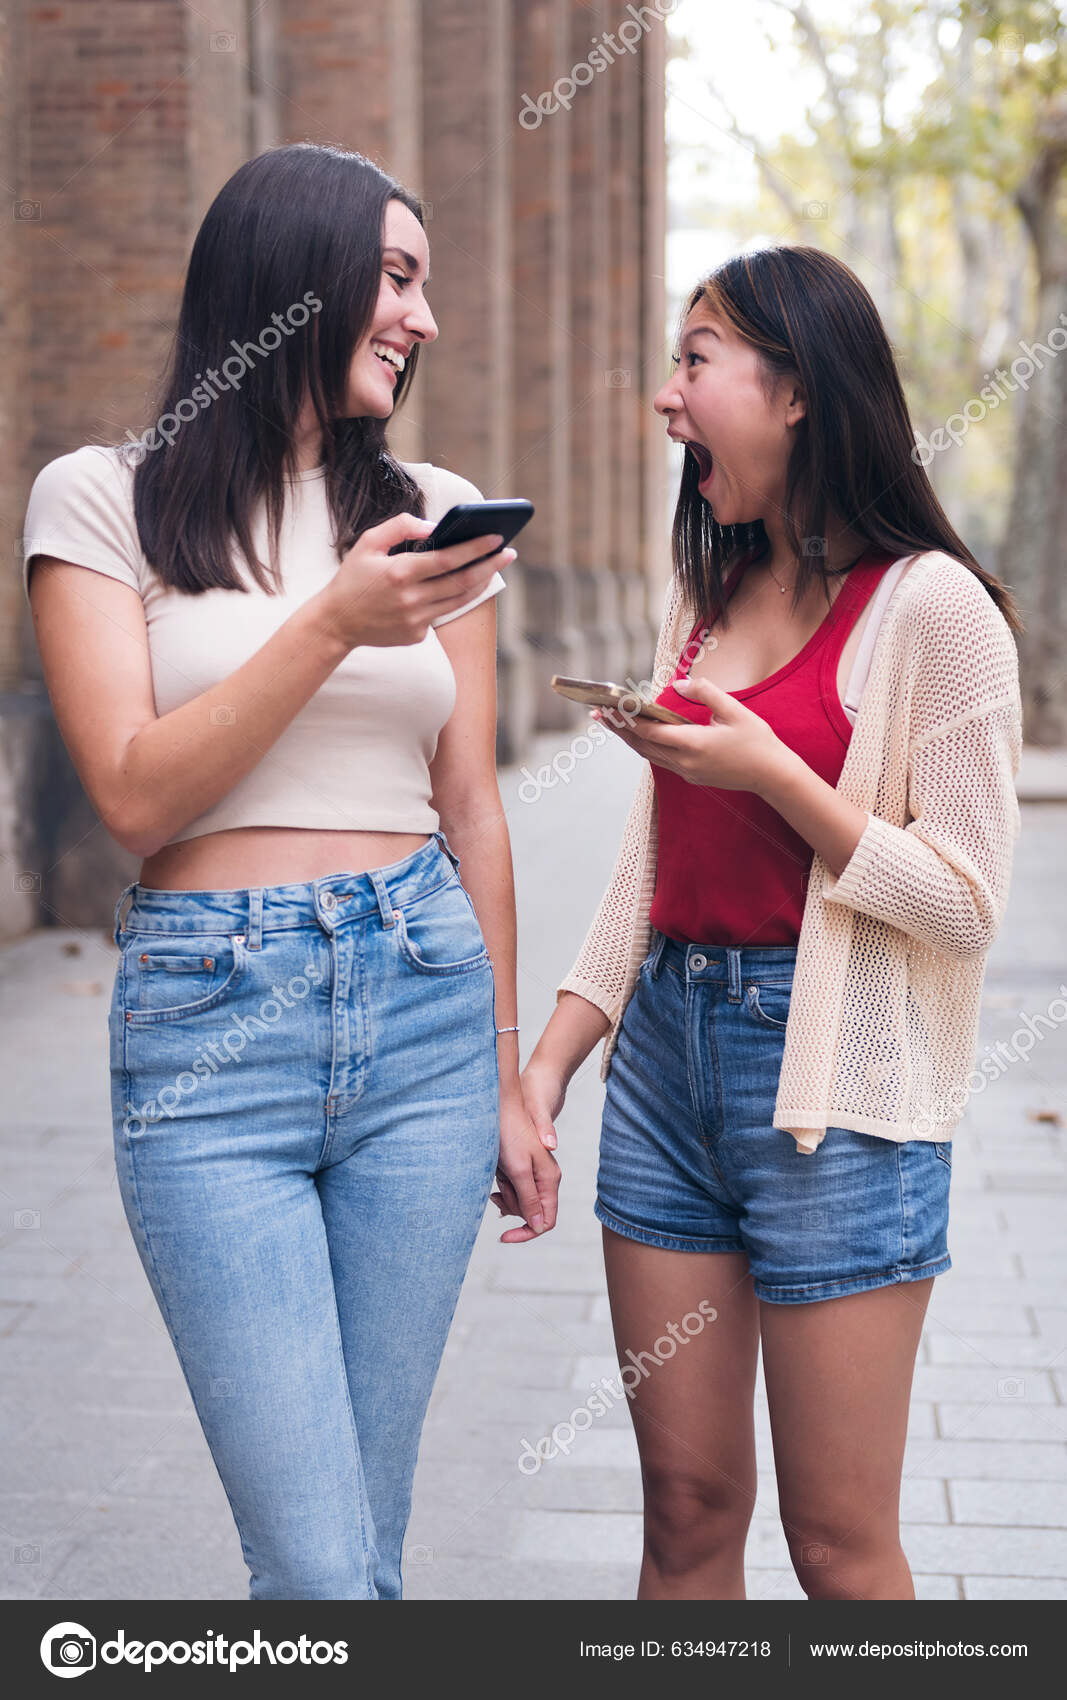 Two Young Women Sharing Confidences Having Fun Cell Phones While — Stockfotografi © raulmellado #634947218